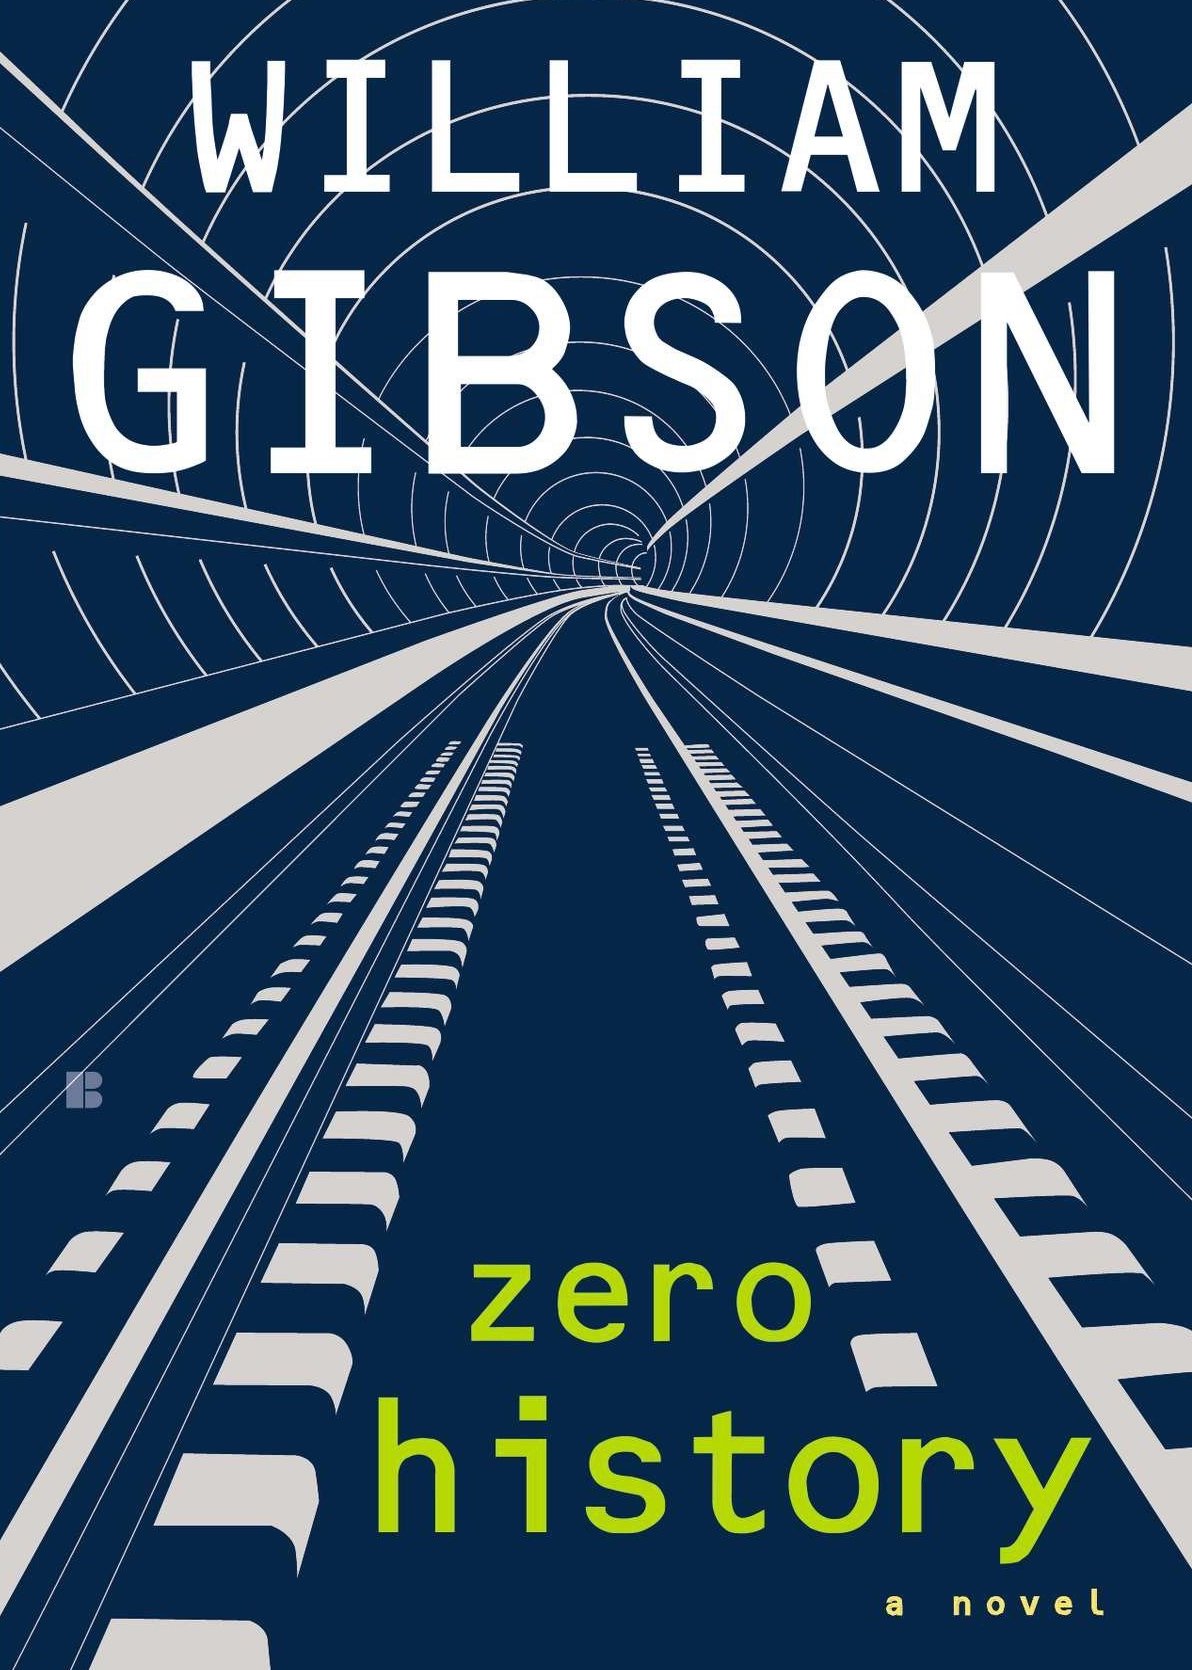 William Gibson: Zero history (2012, Berkley Books)